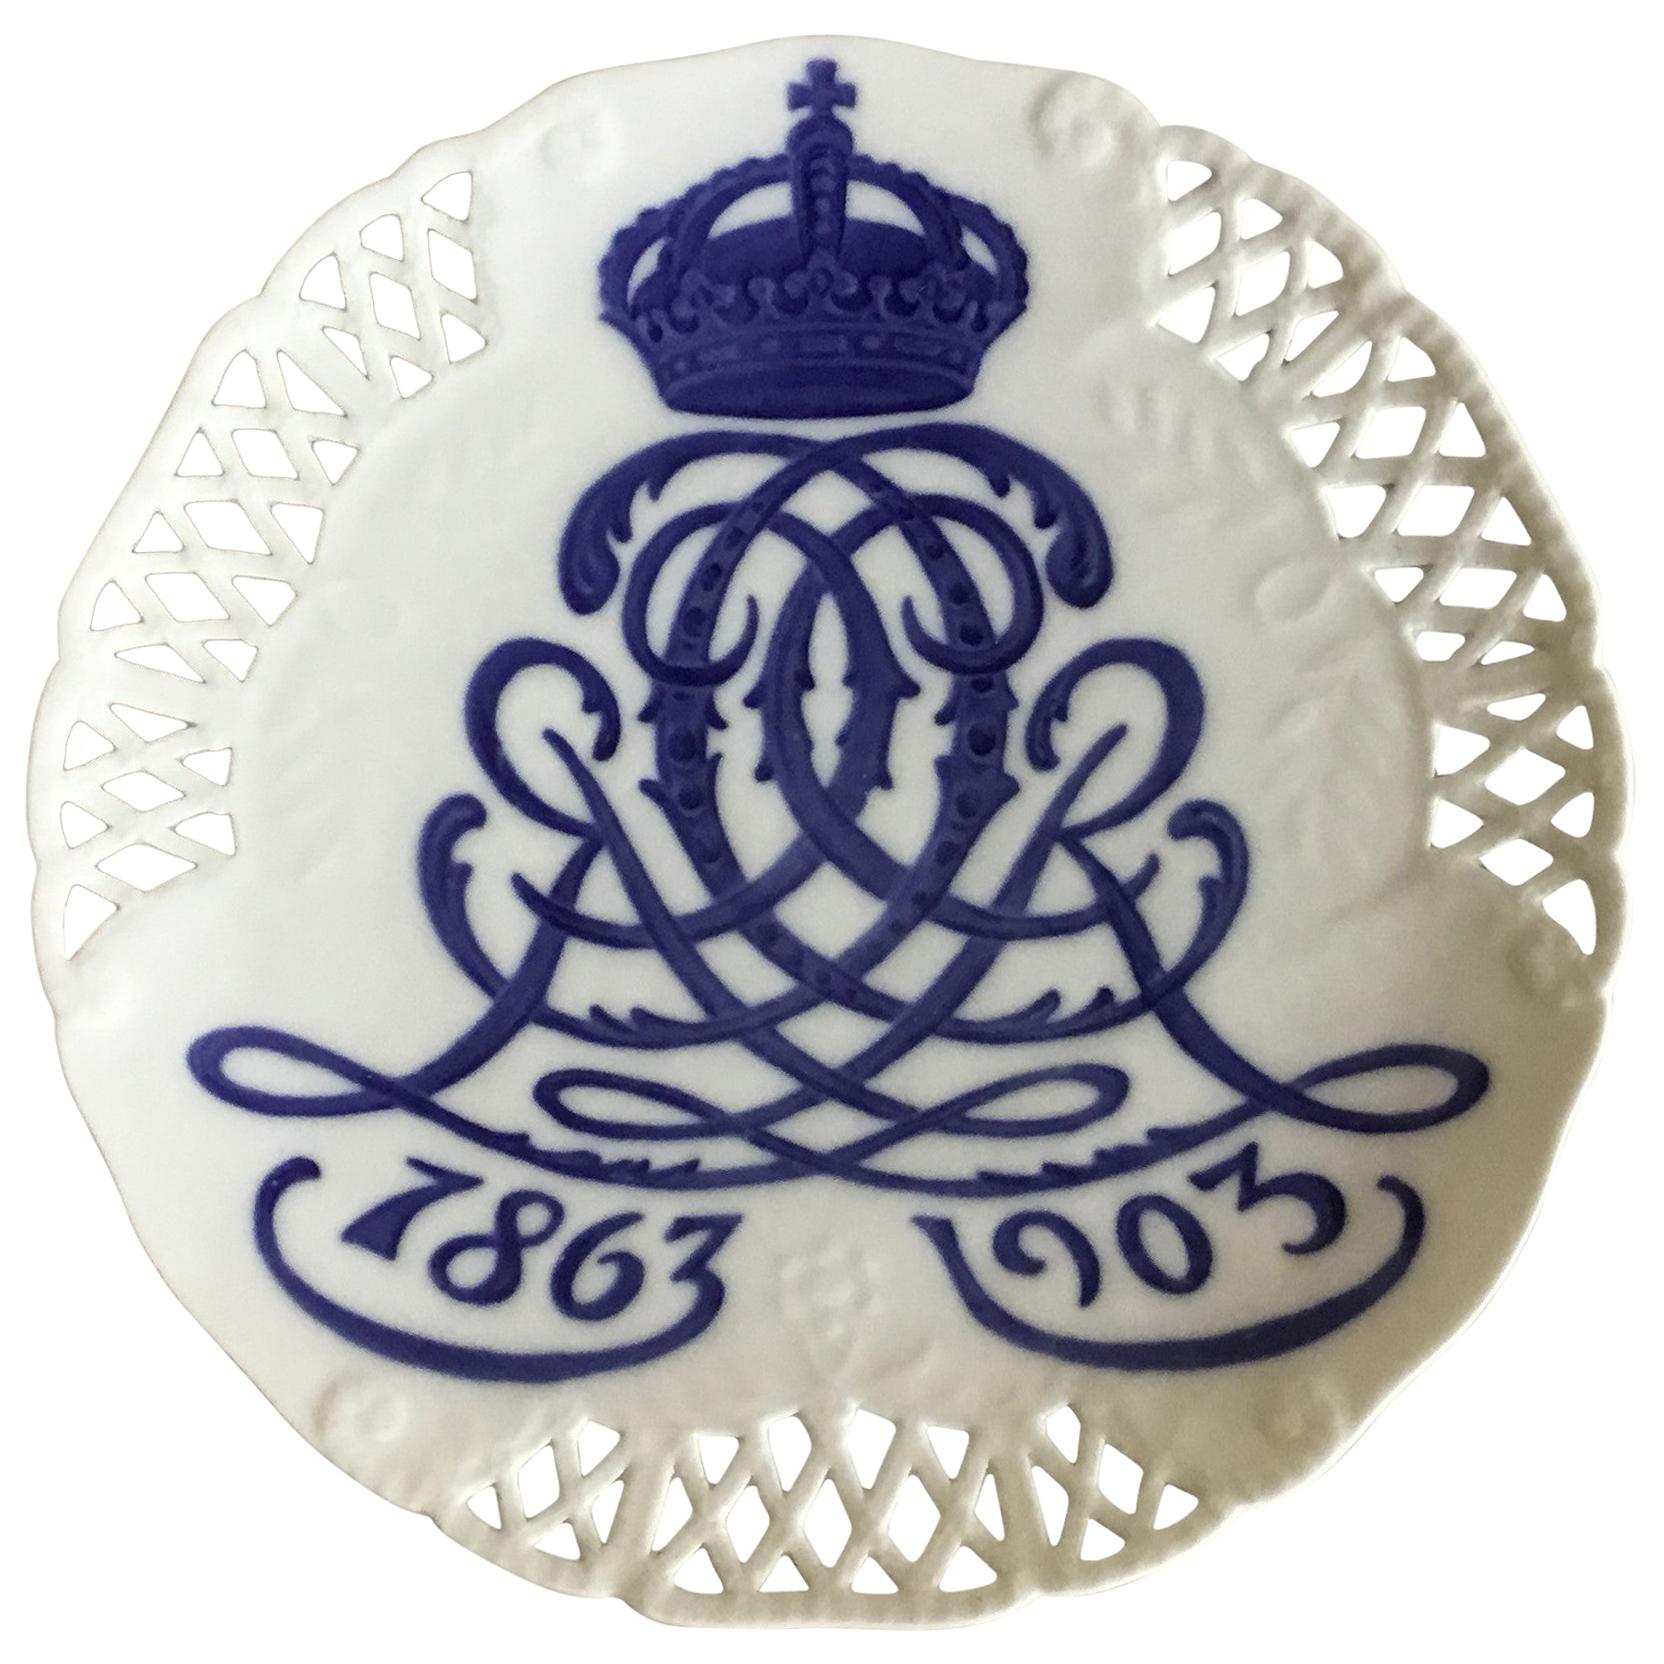 Royal Copenhagen Commemorative Plate from 1903 RC-CM46A